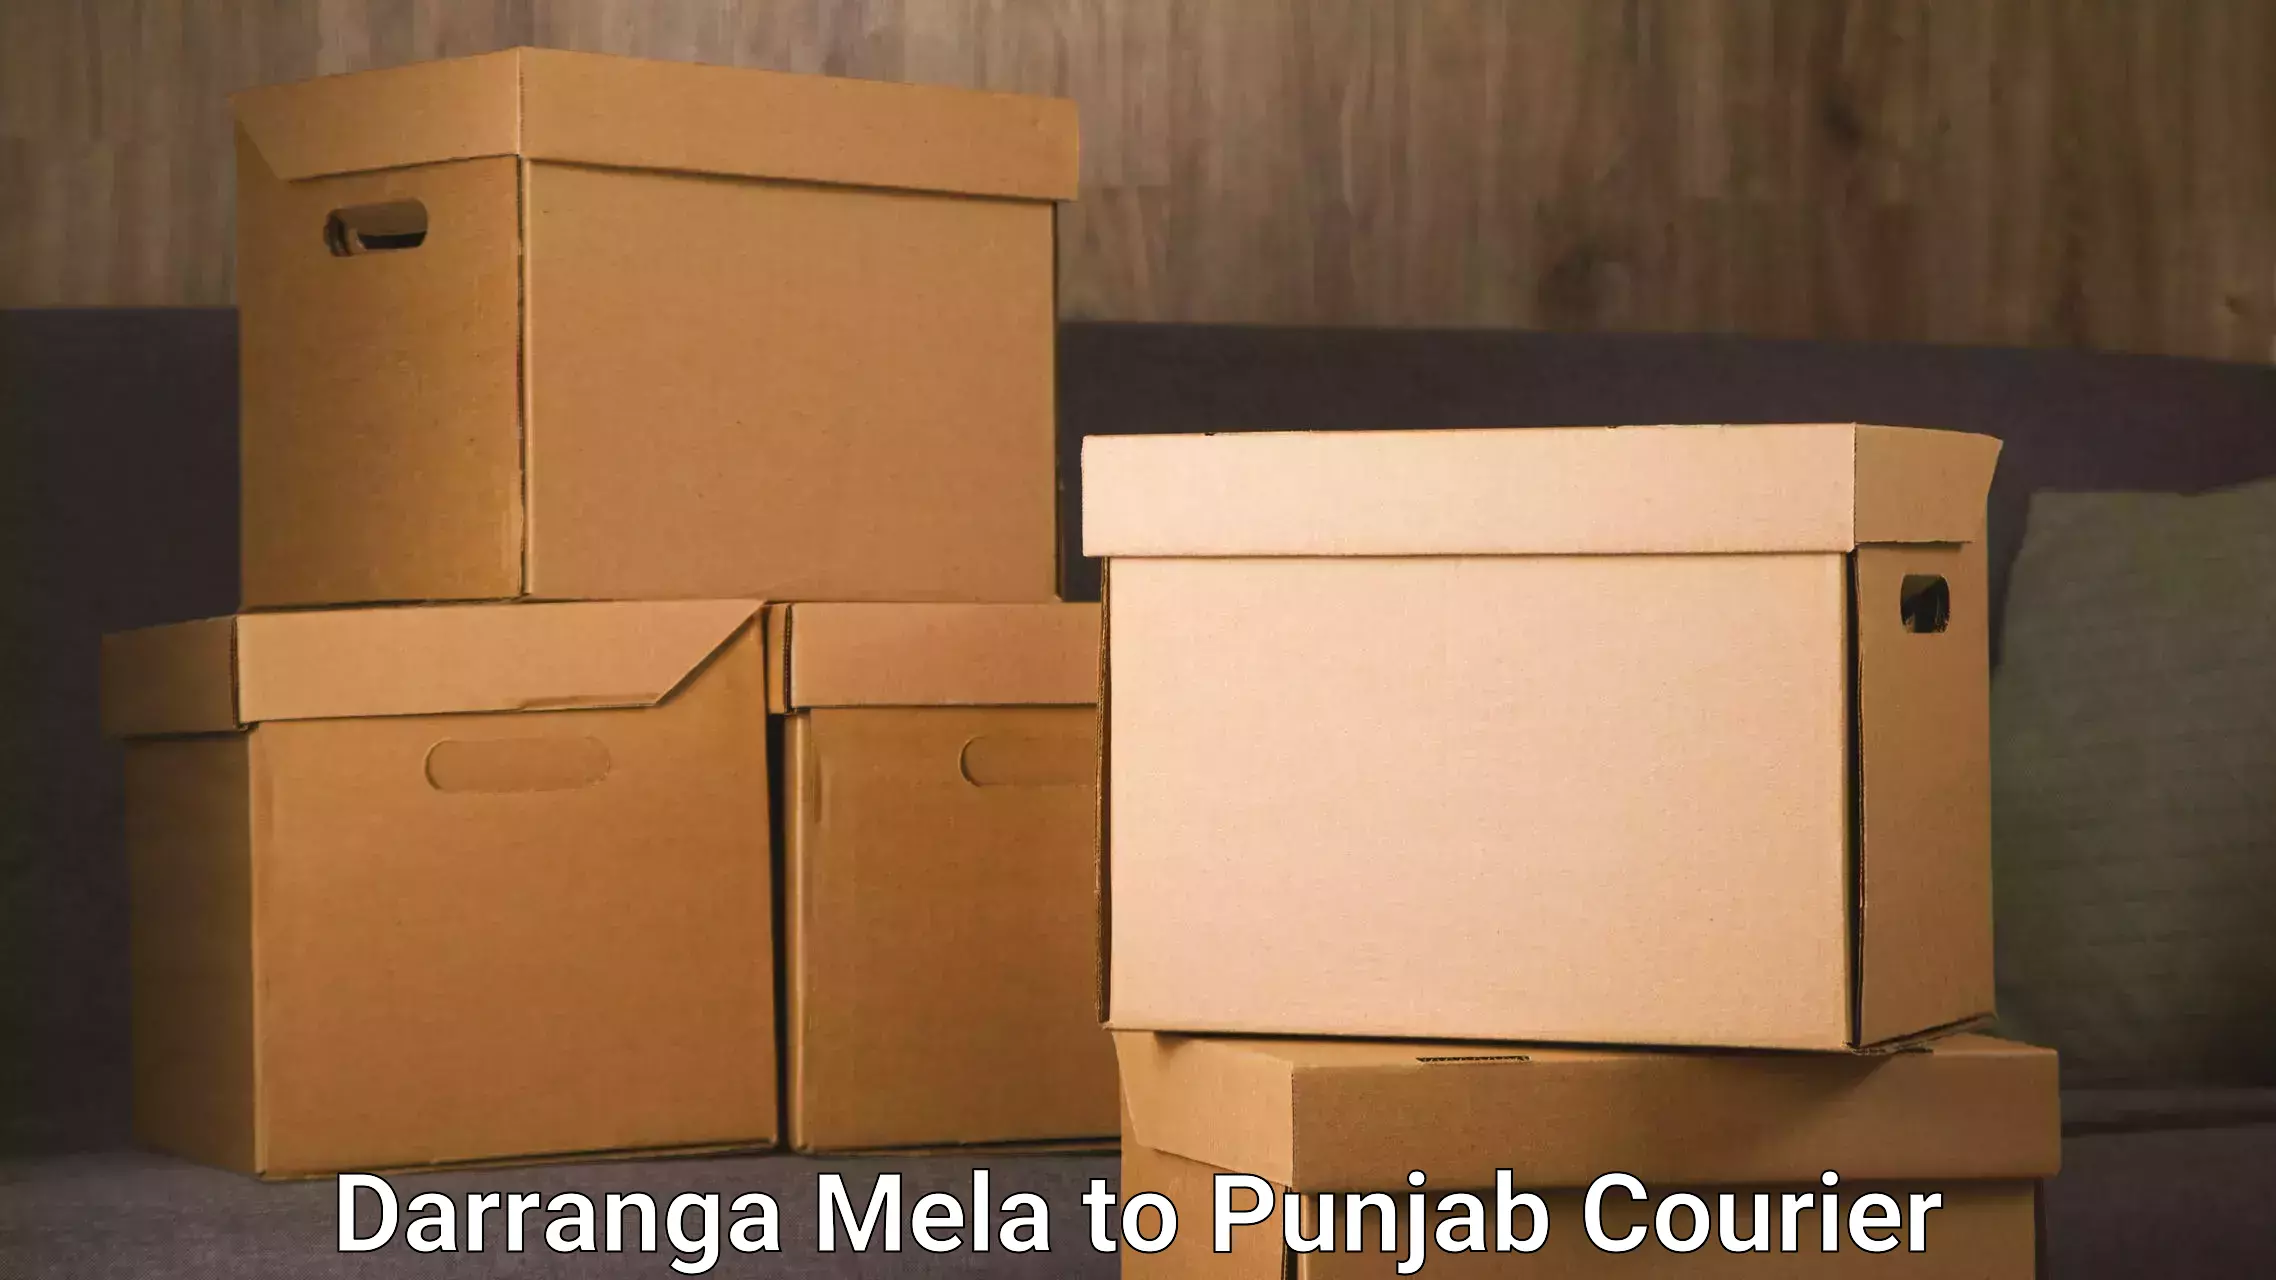 Fast-track shipping solutions Darranga Mela to Ajnala